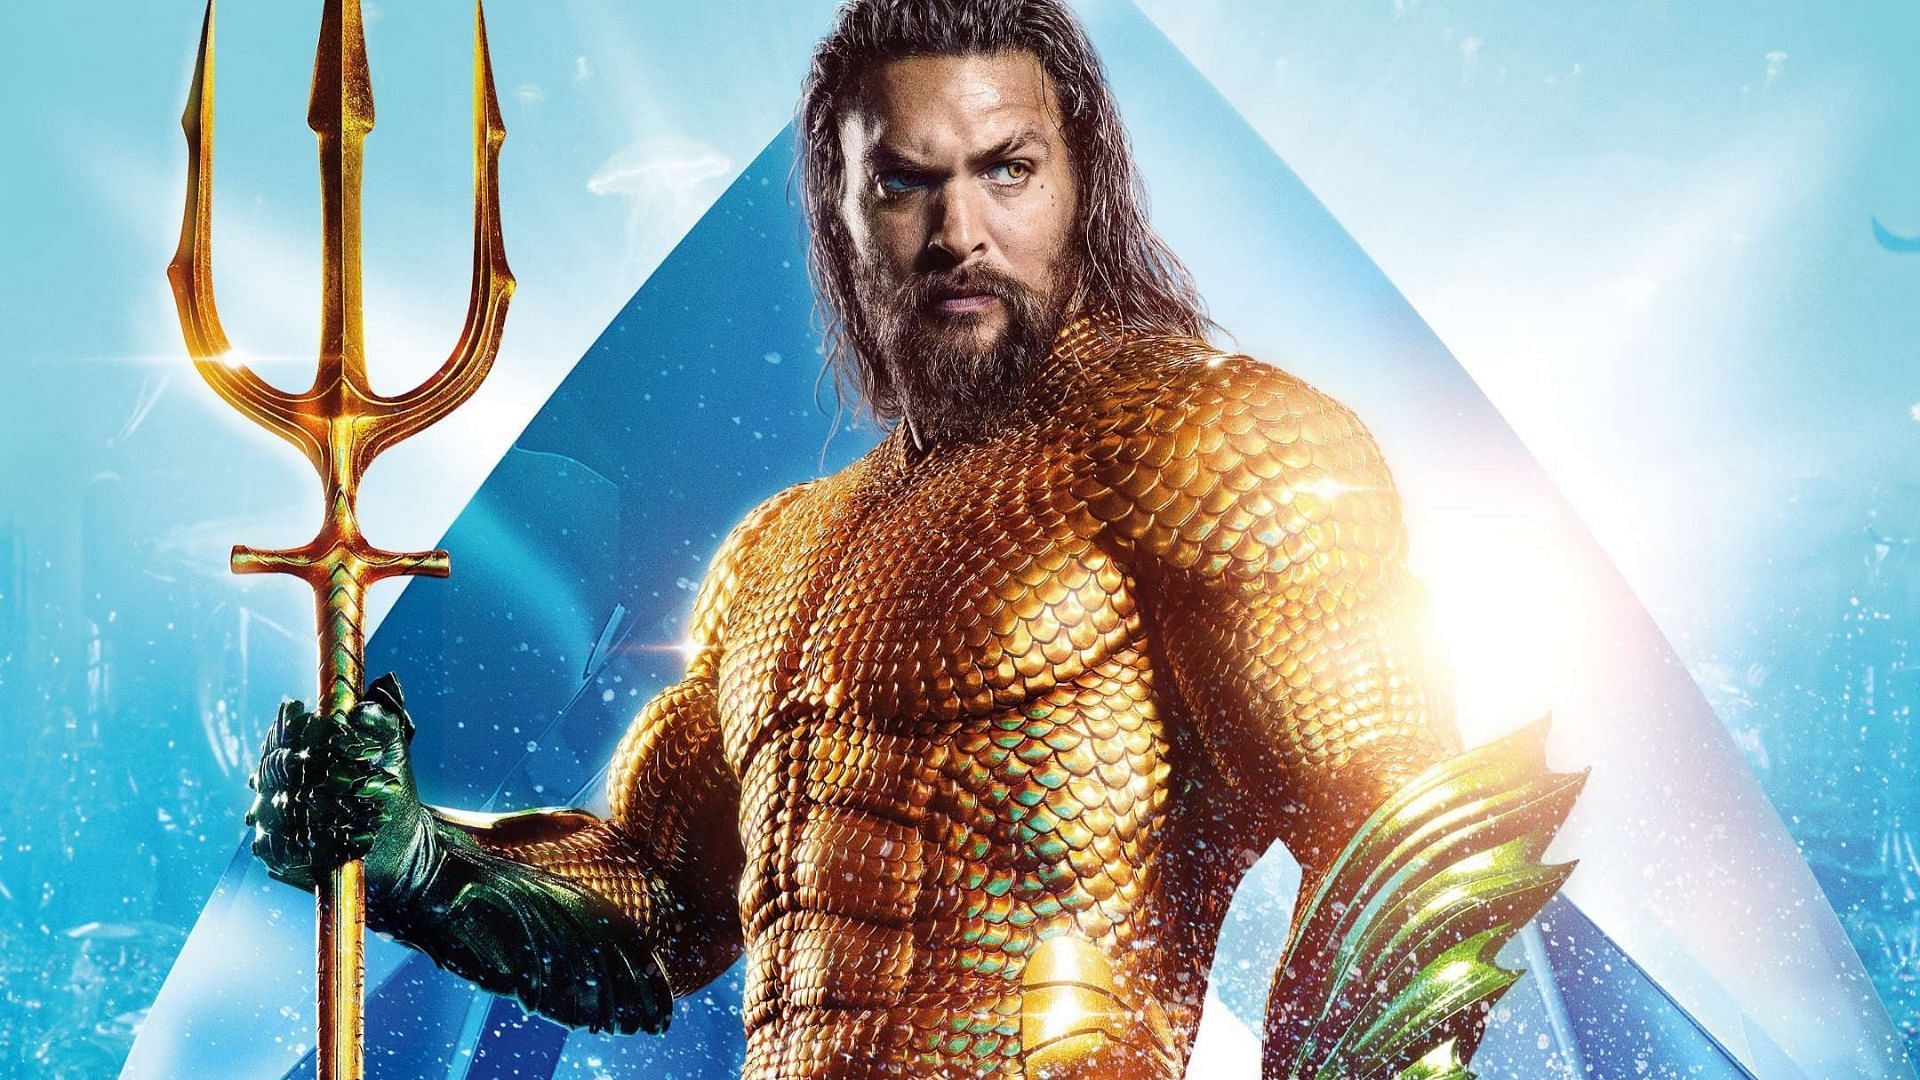 Jason Momoa stars in the new Aquaman film (Image via Twitter)